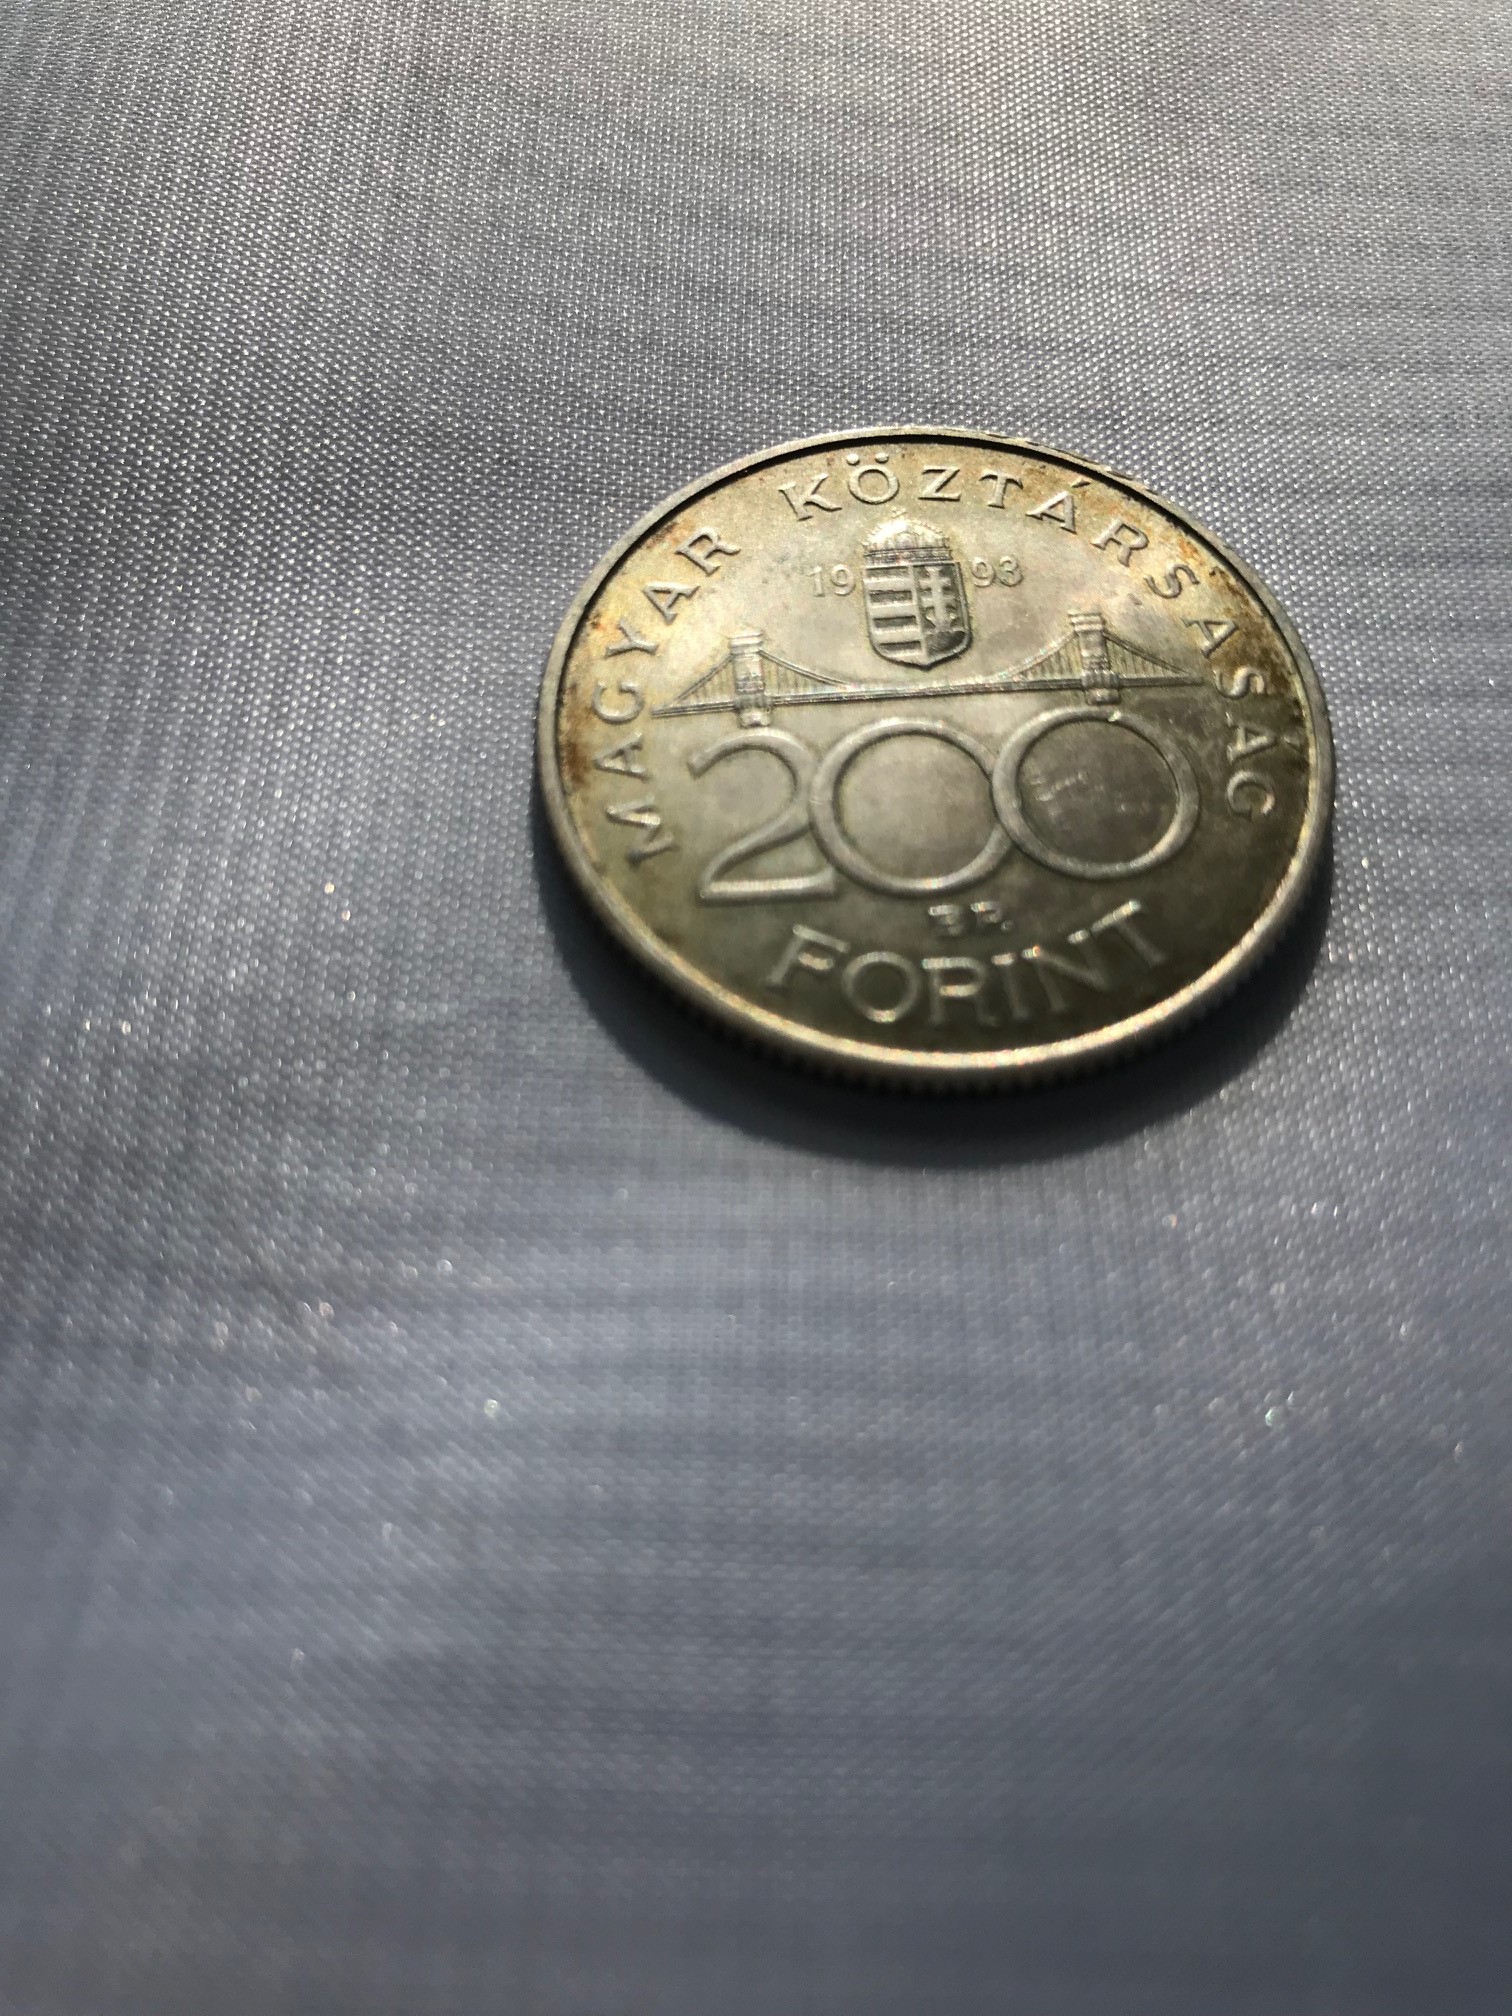 1993 200 Forint obverse